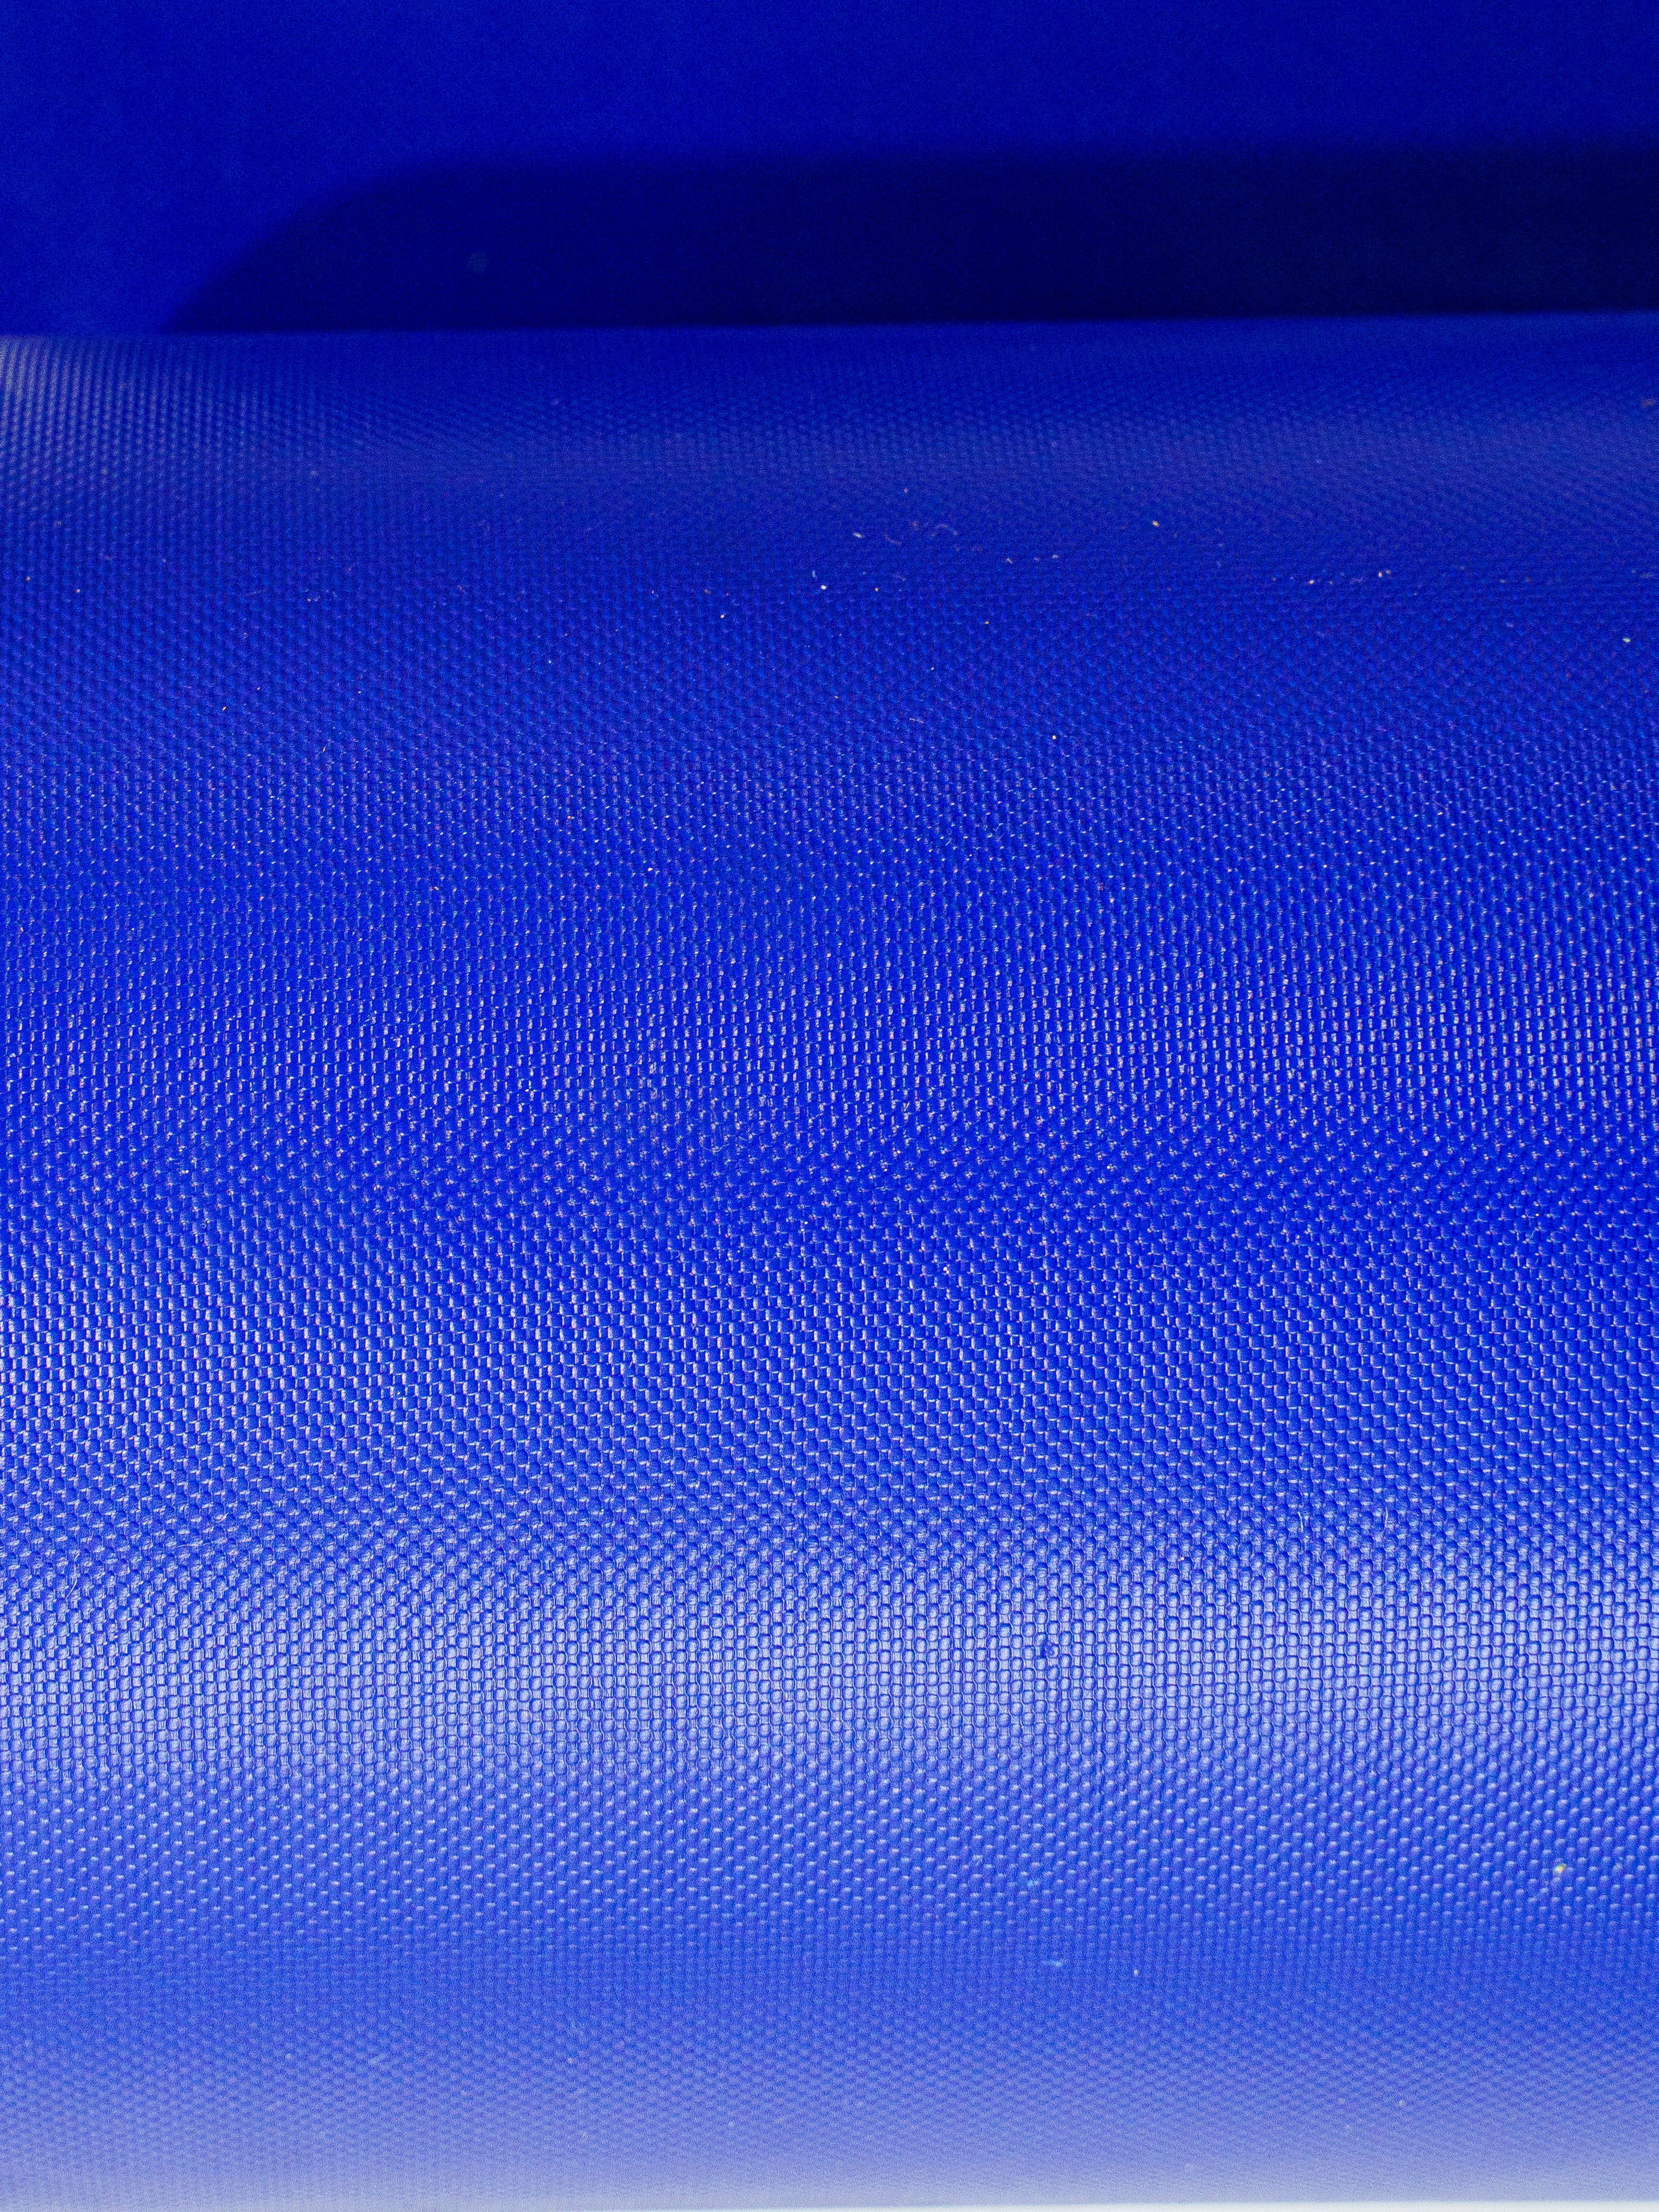 Плёнка ПВХ тонированная синяя. Стеновой протектор стандарт 30мм ПВХ-ткань 630гр/м2 НПЭ 22кг/м3. Ткань ПВХ голубая -. Стеновой протектор стандарт 30мм ПВХ-ткань 630гр/м2 НПЭ 22кг/м3 цена. Пленка пвх голубой